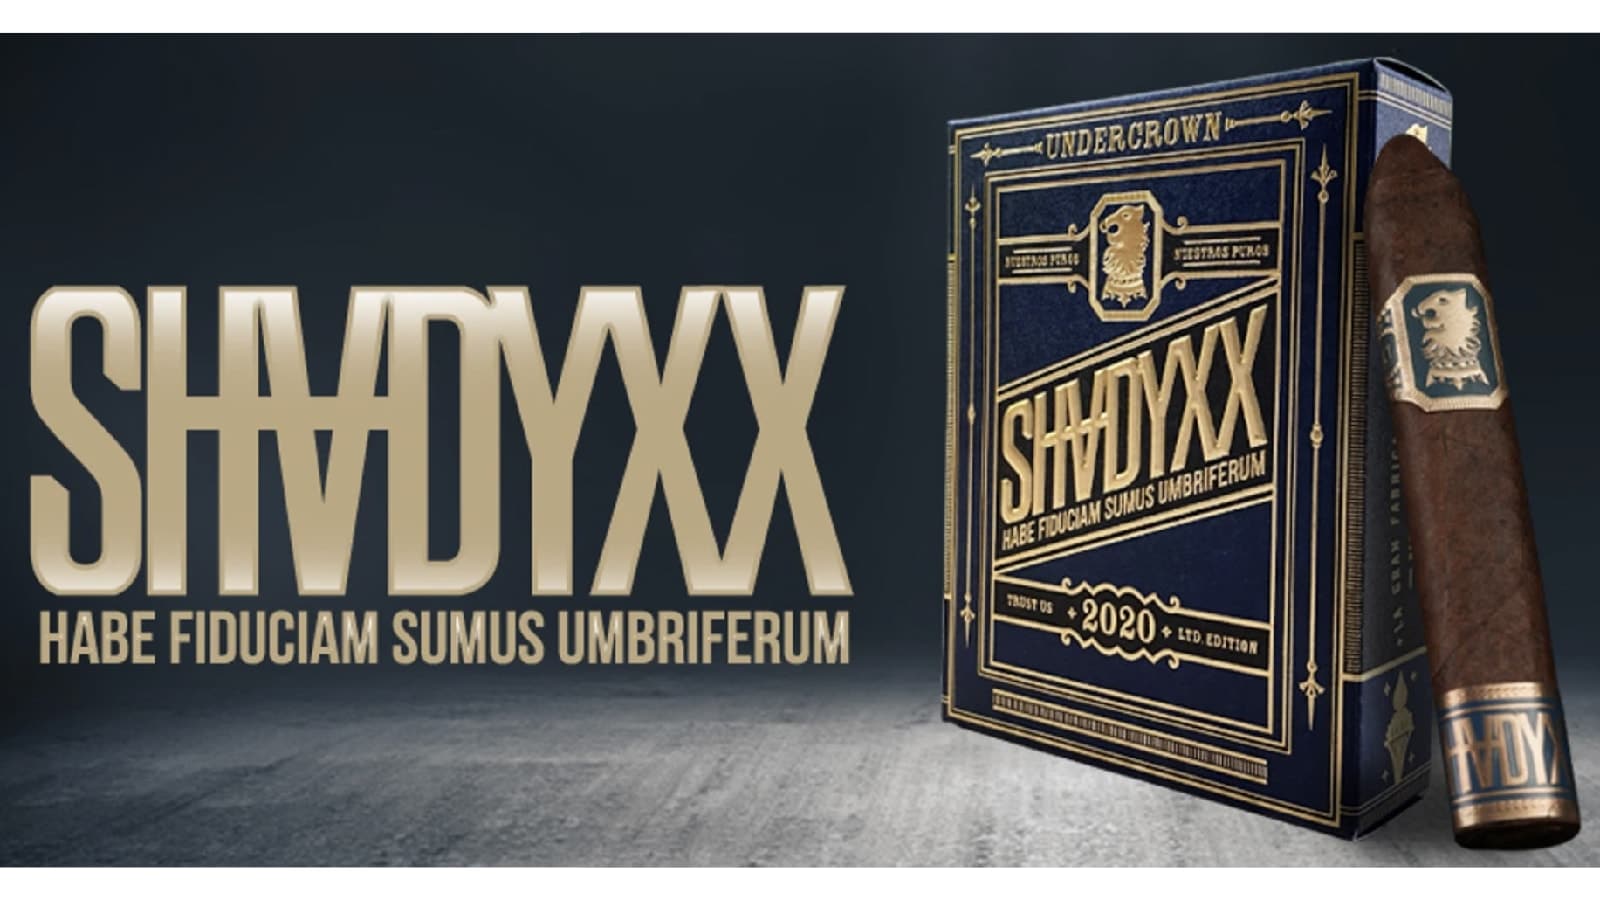 Undercrown ShadyXX Returns for 2020